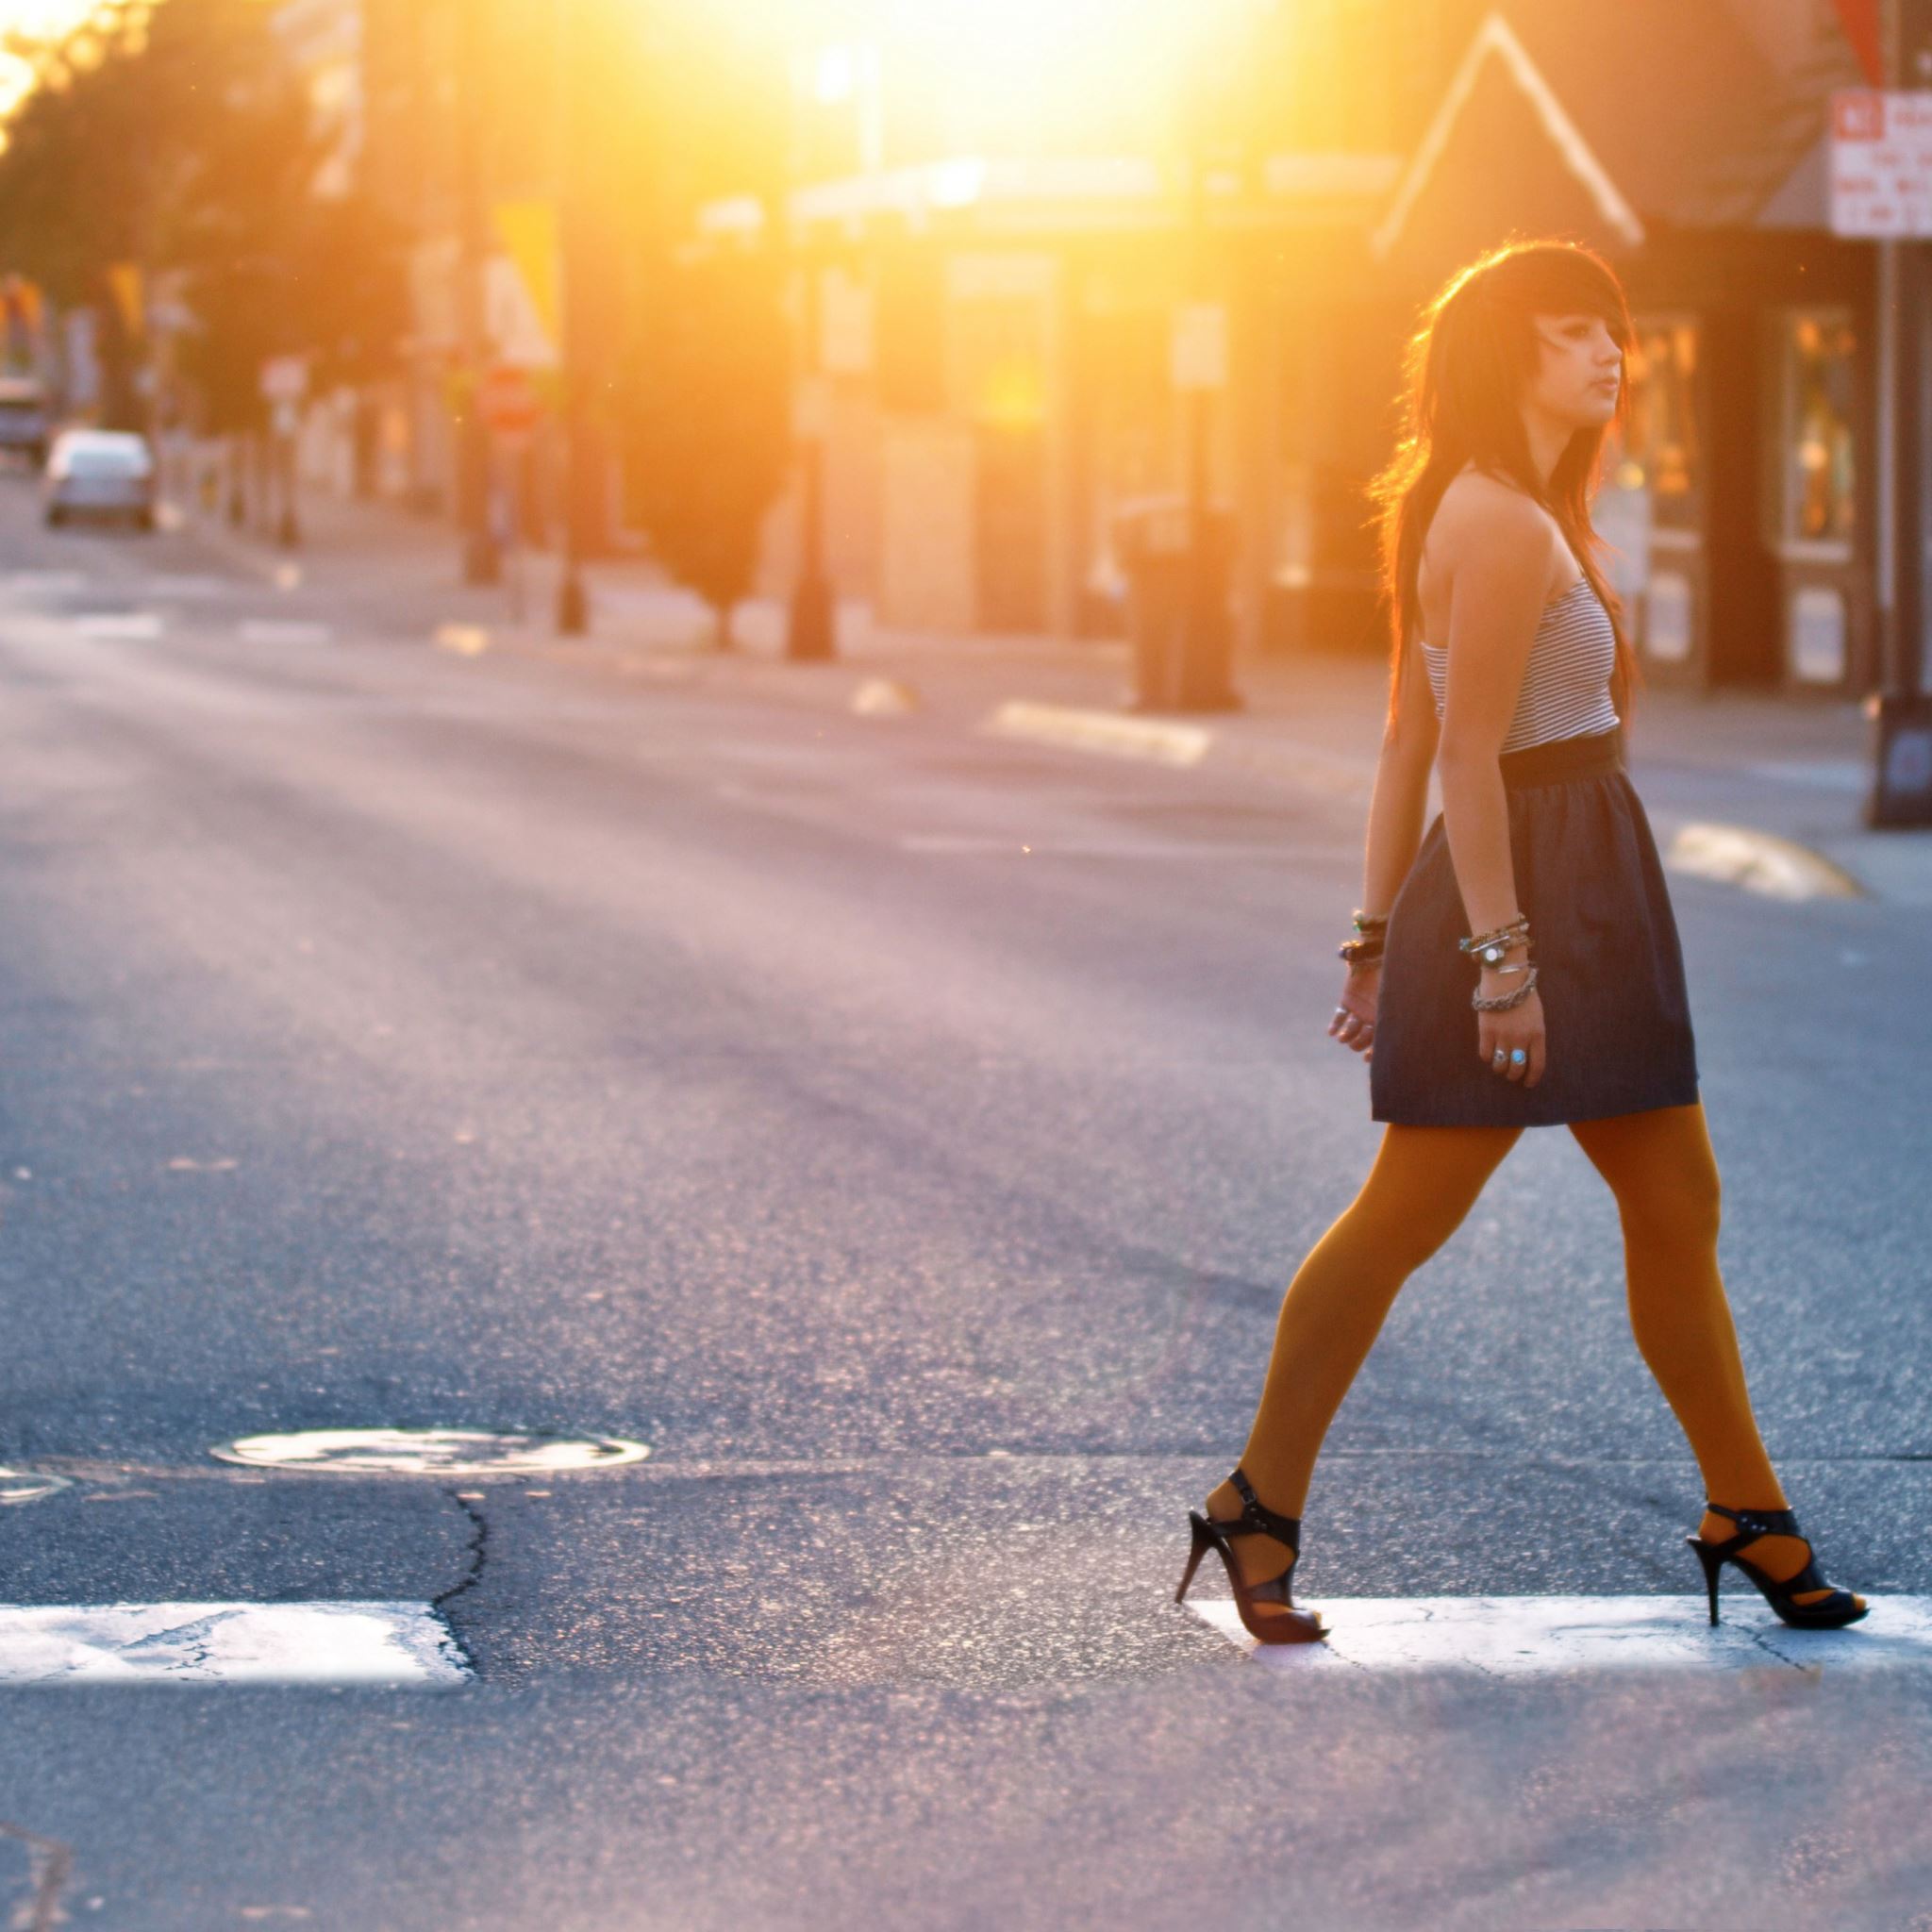 Girl crossing the street iPad Air wallpaper 